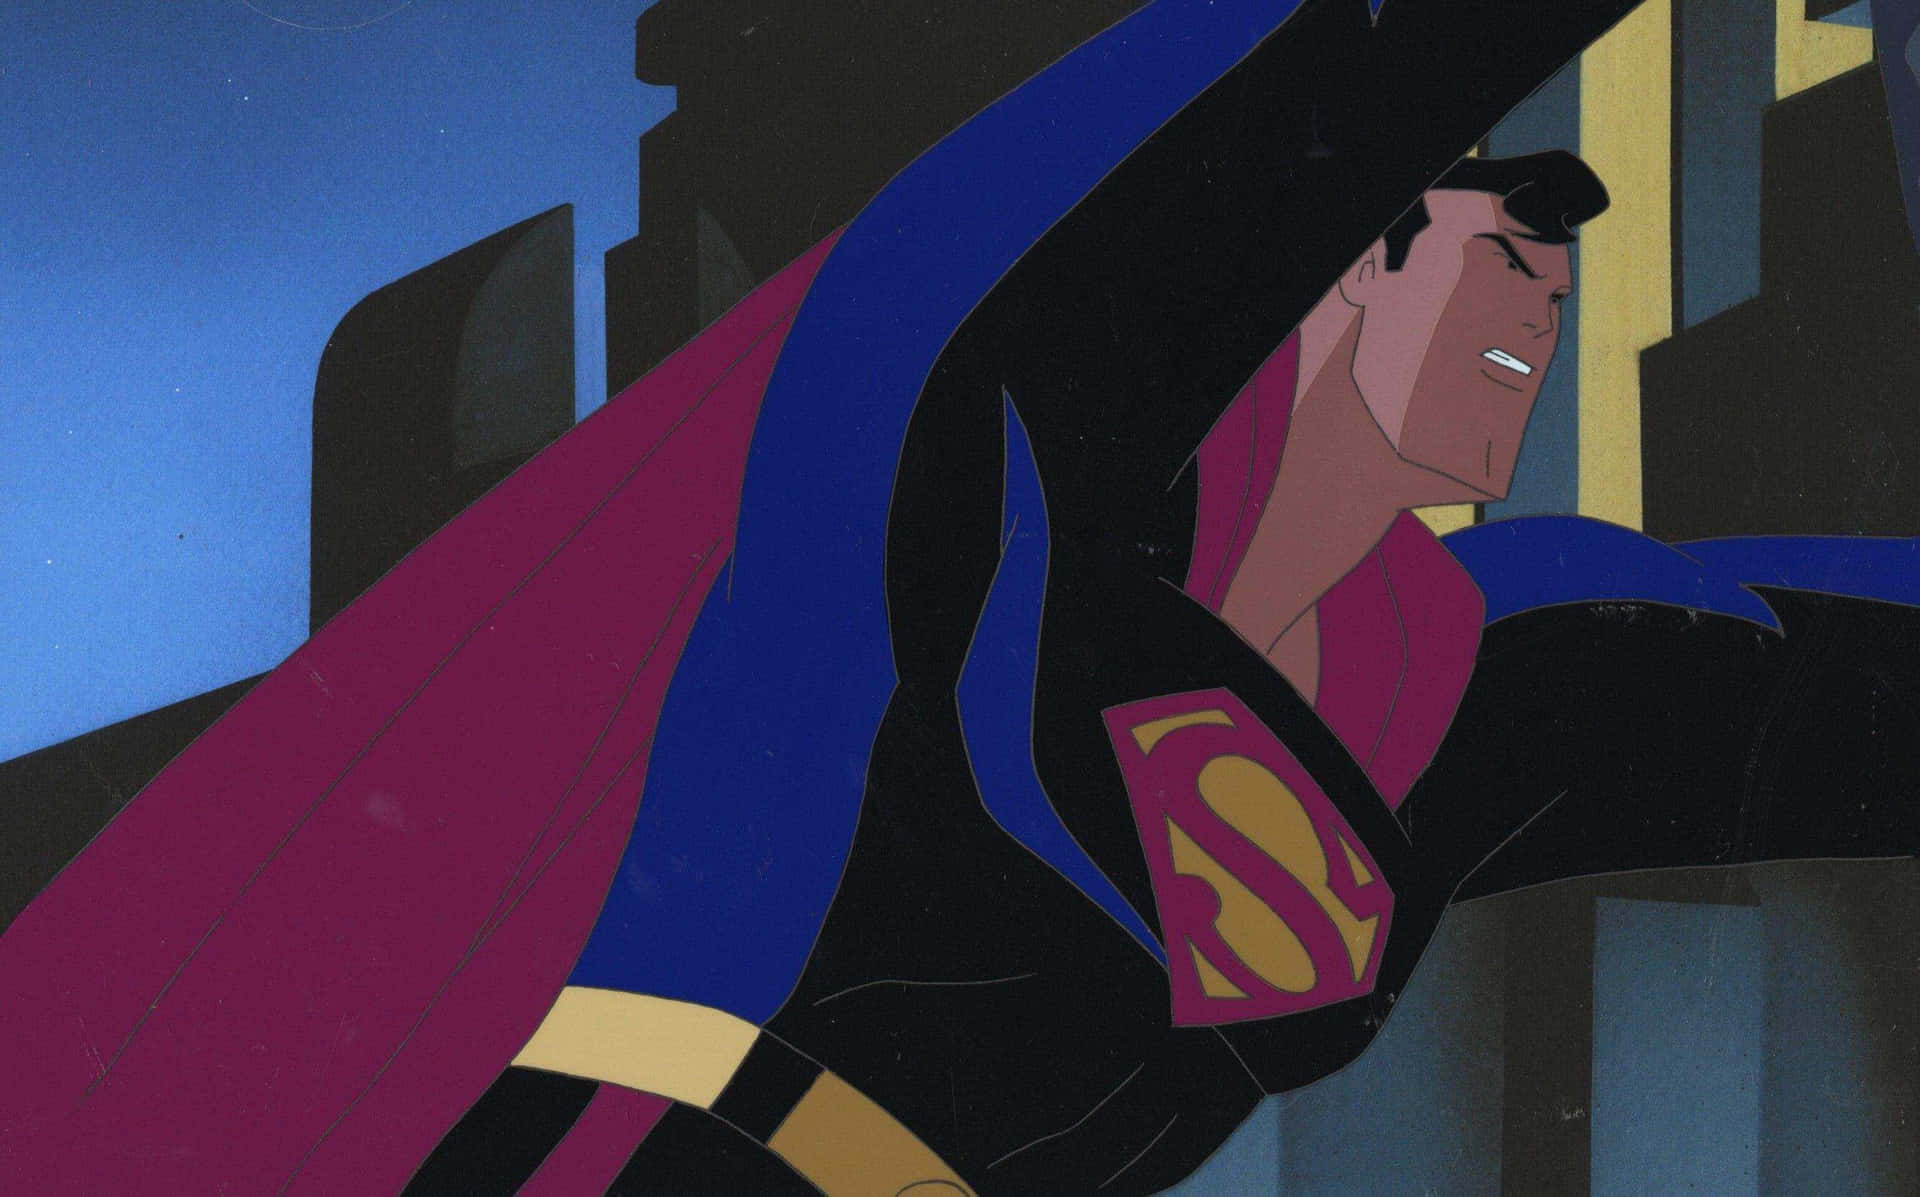 Superman soars through the skies of Metropolis in Superman: The Animated Series Wallpaper